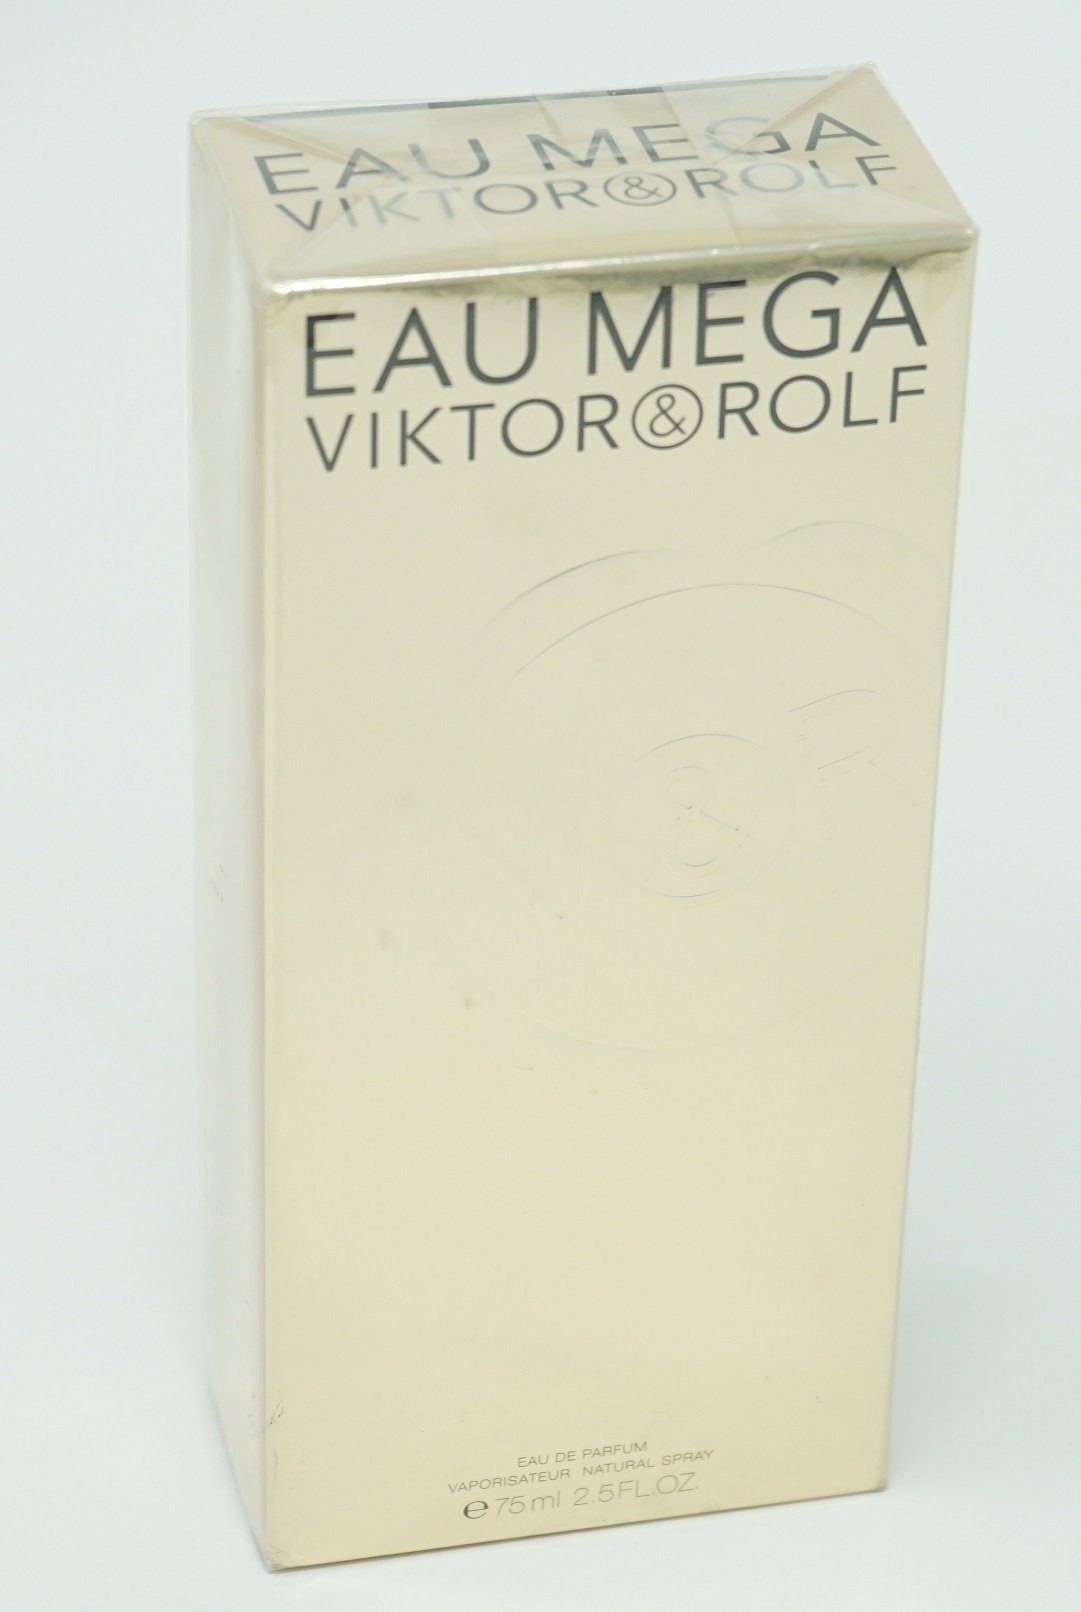 Viktor & Rolf Eau de Parfum Viktor & Rolf Eau Mega Eau De Parfum 75 ml | Eau de Parfum